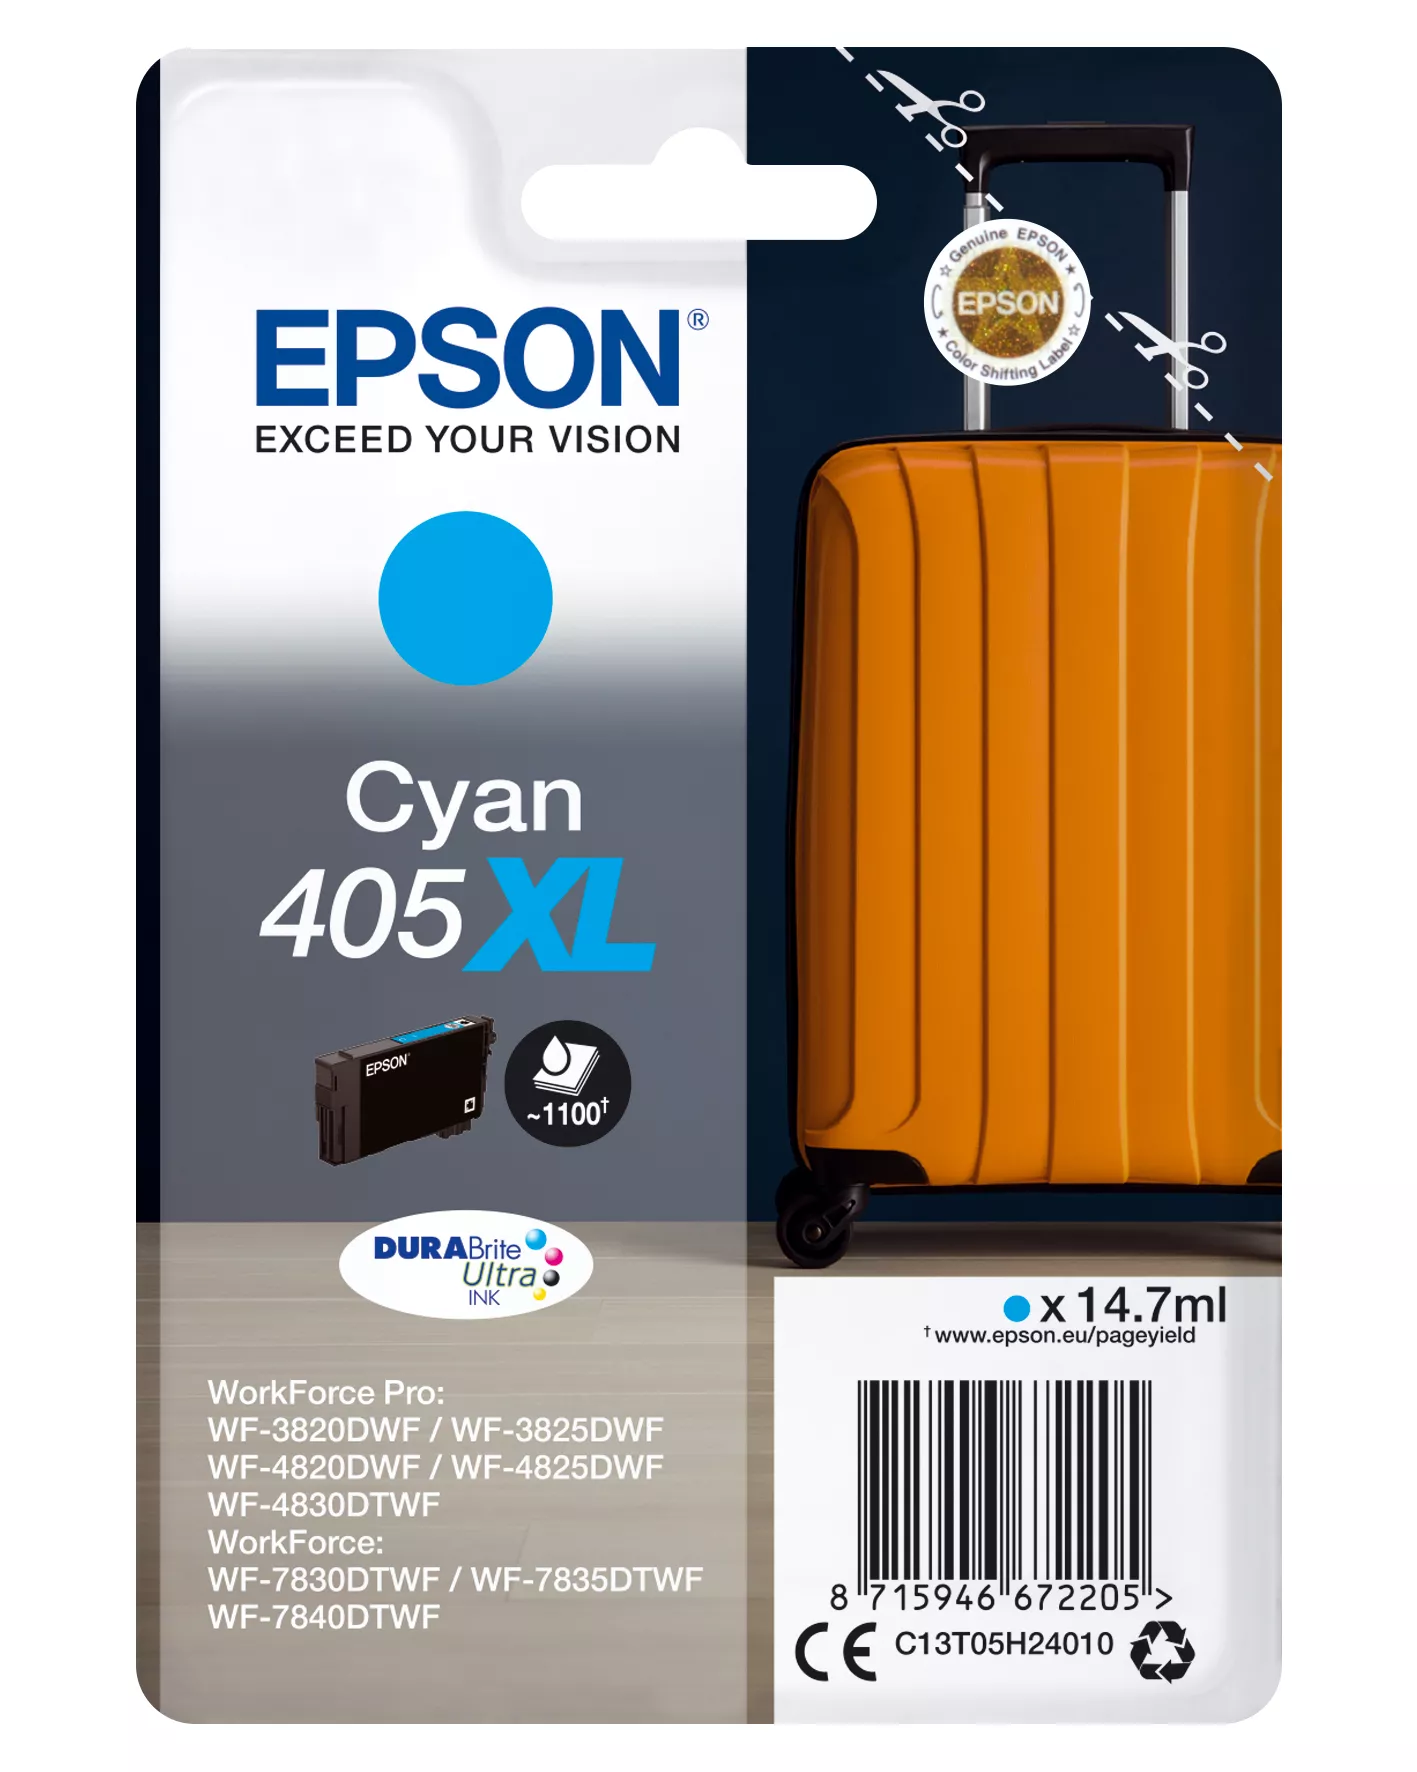 Vente Epson Singlepack Cyan 405XL DURABrite Ultra Ink au meilleur prix